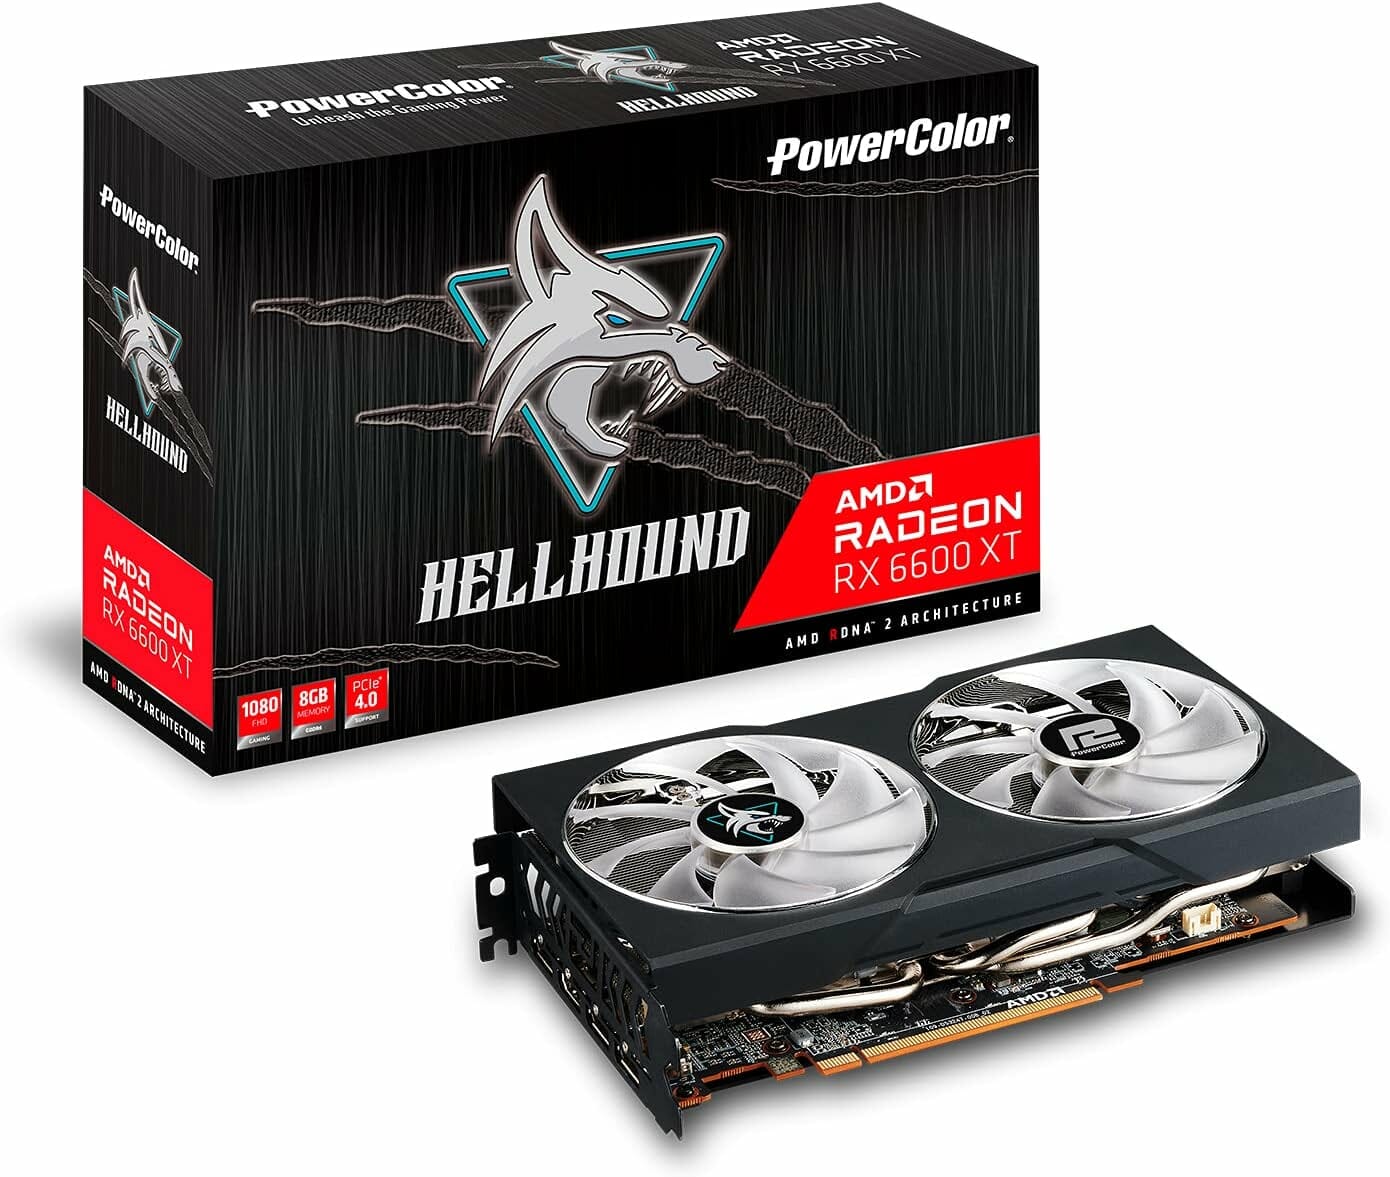 PowerColor Hellhound Radeon RX 6600XT